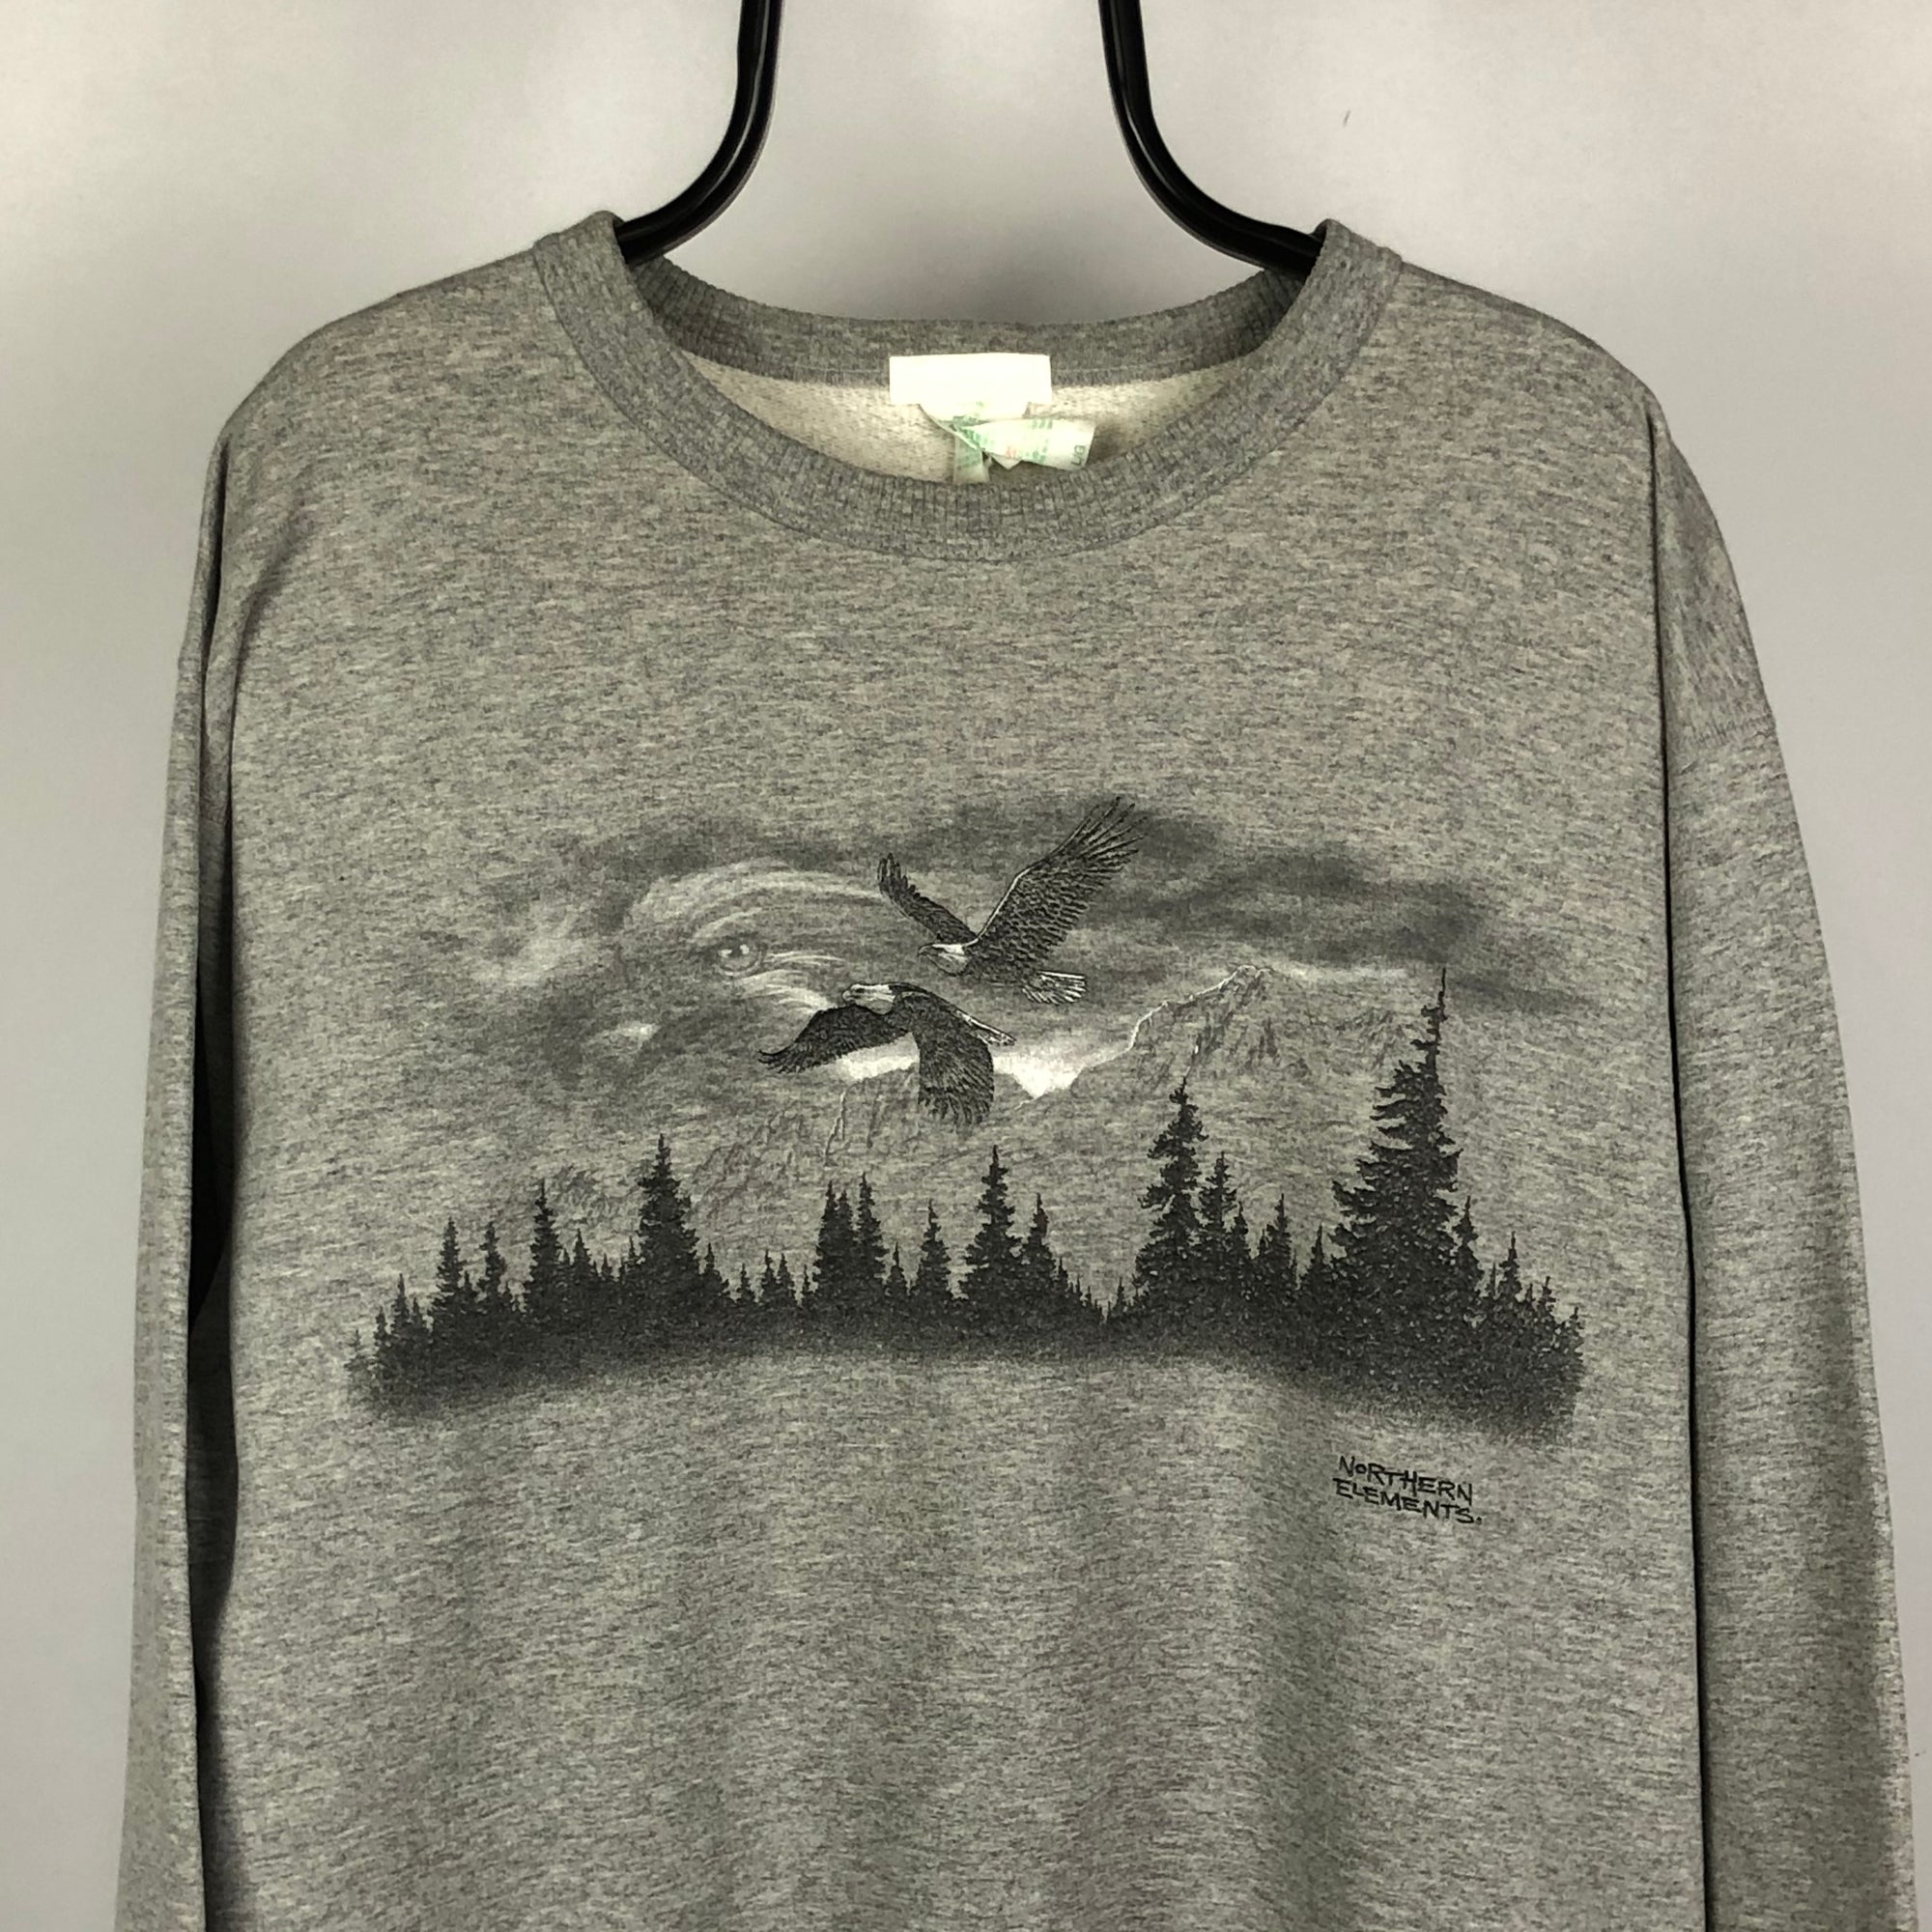 Vintage Wild Eagles Print Sweatshirt in Grey - Men's XL/Women's XXL